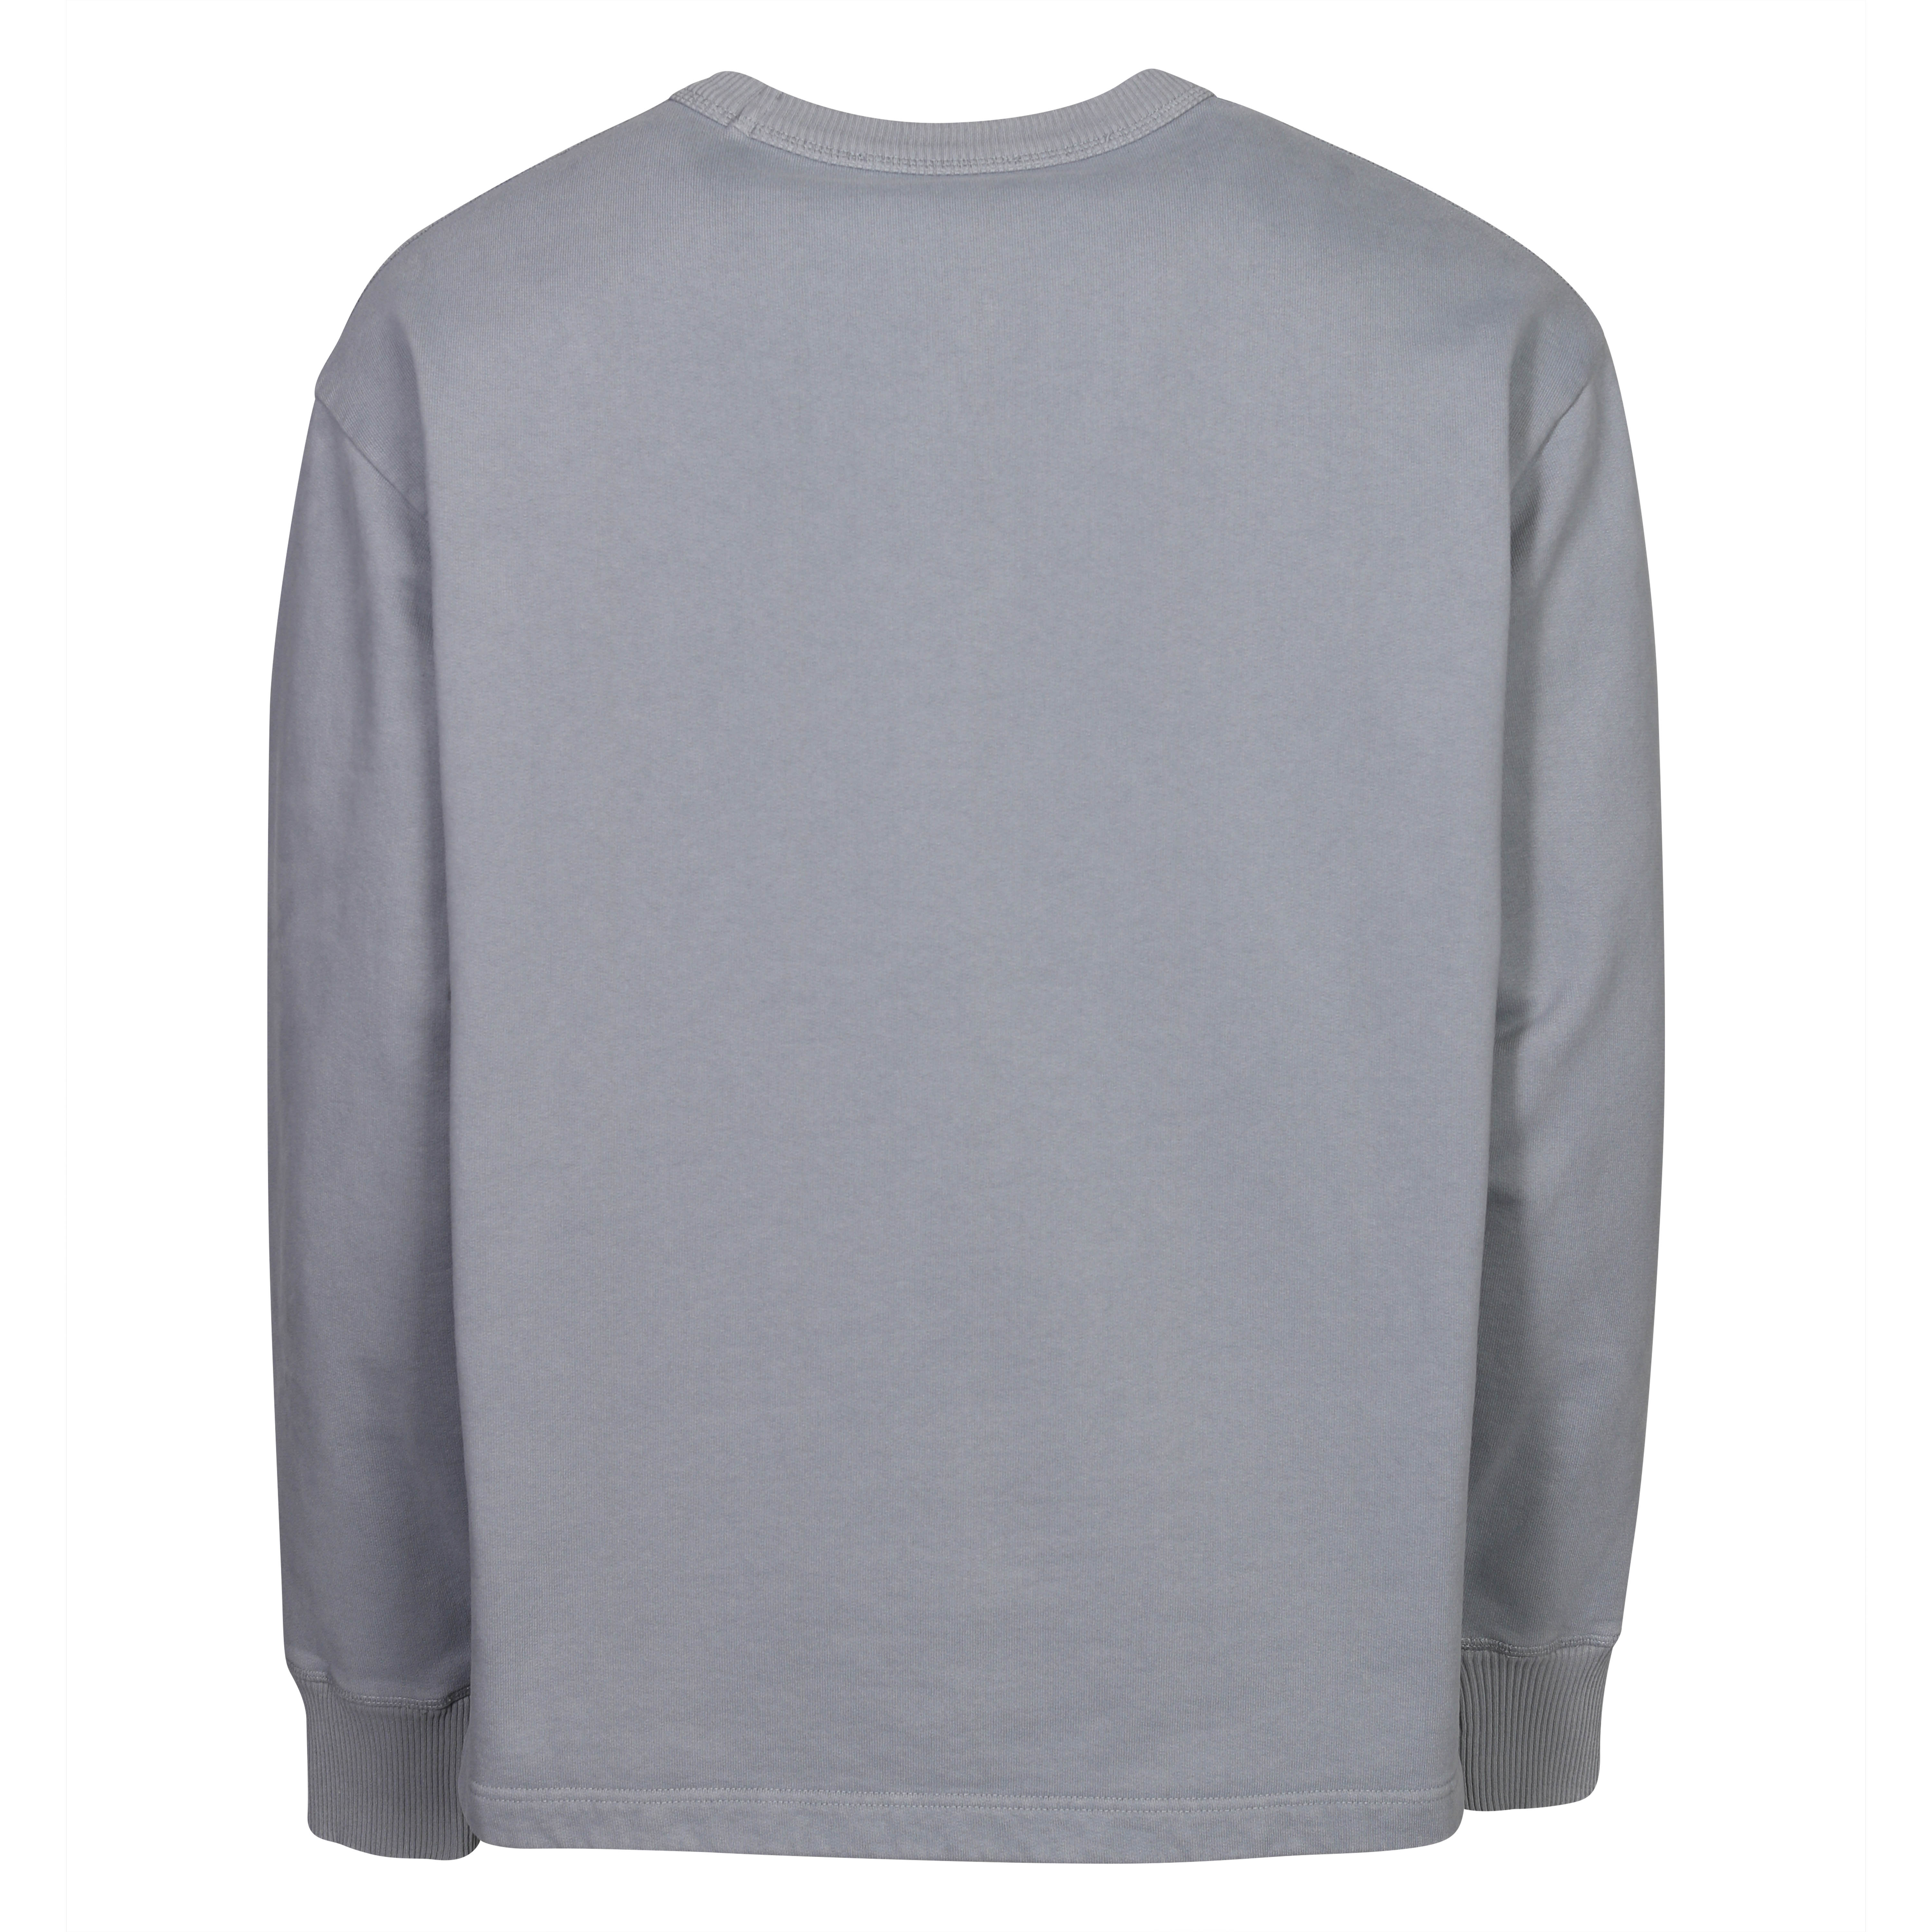 Acne Studios Stamp Sweatshirt in Steel Grey XL